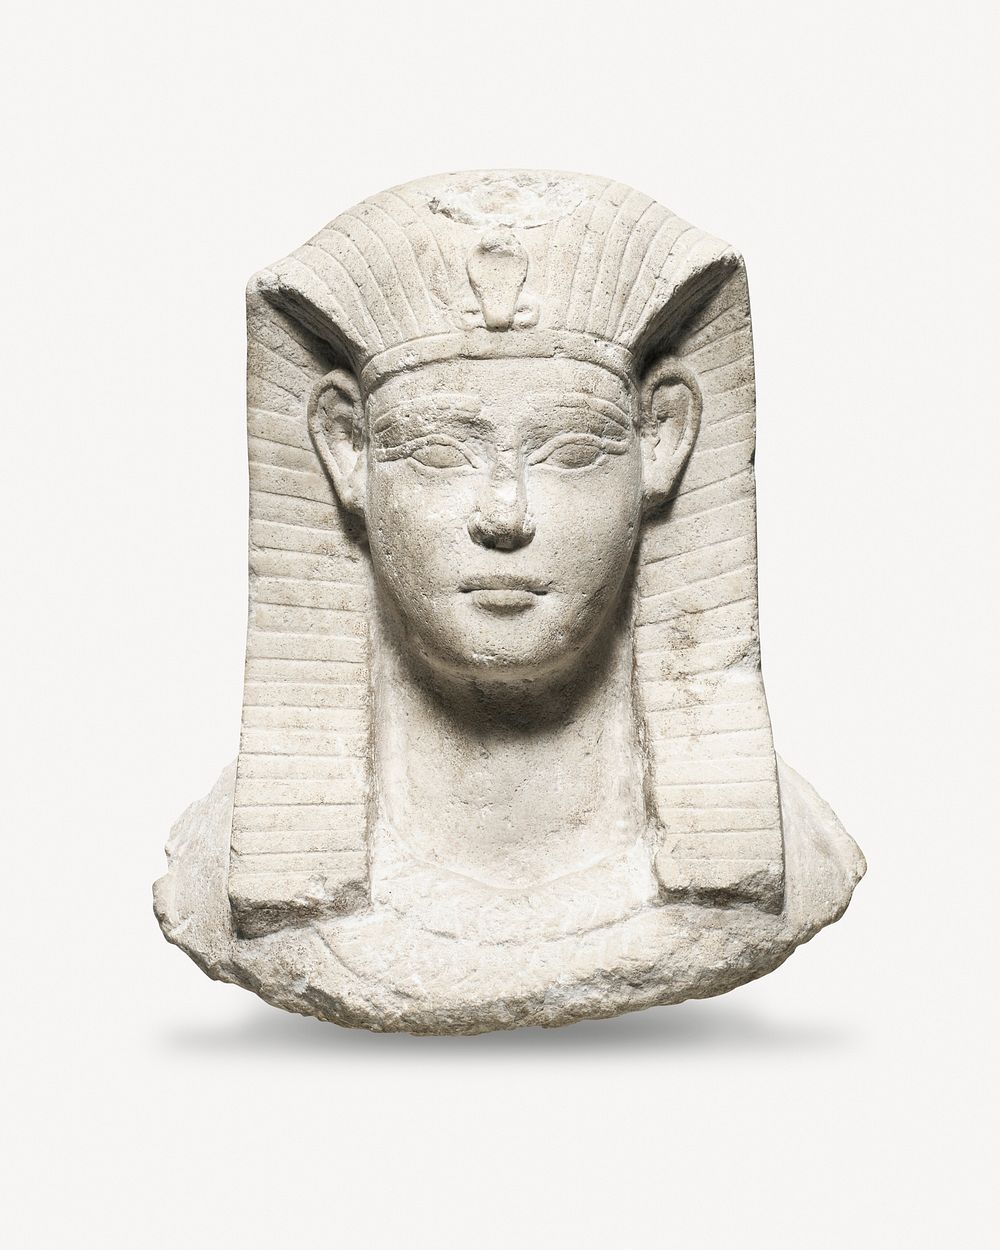 Young Pharaoh sculpture, vintage psd